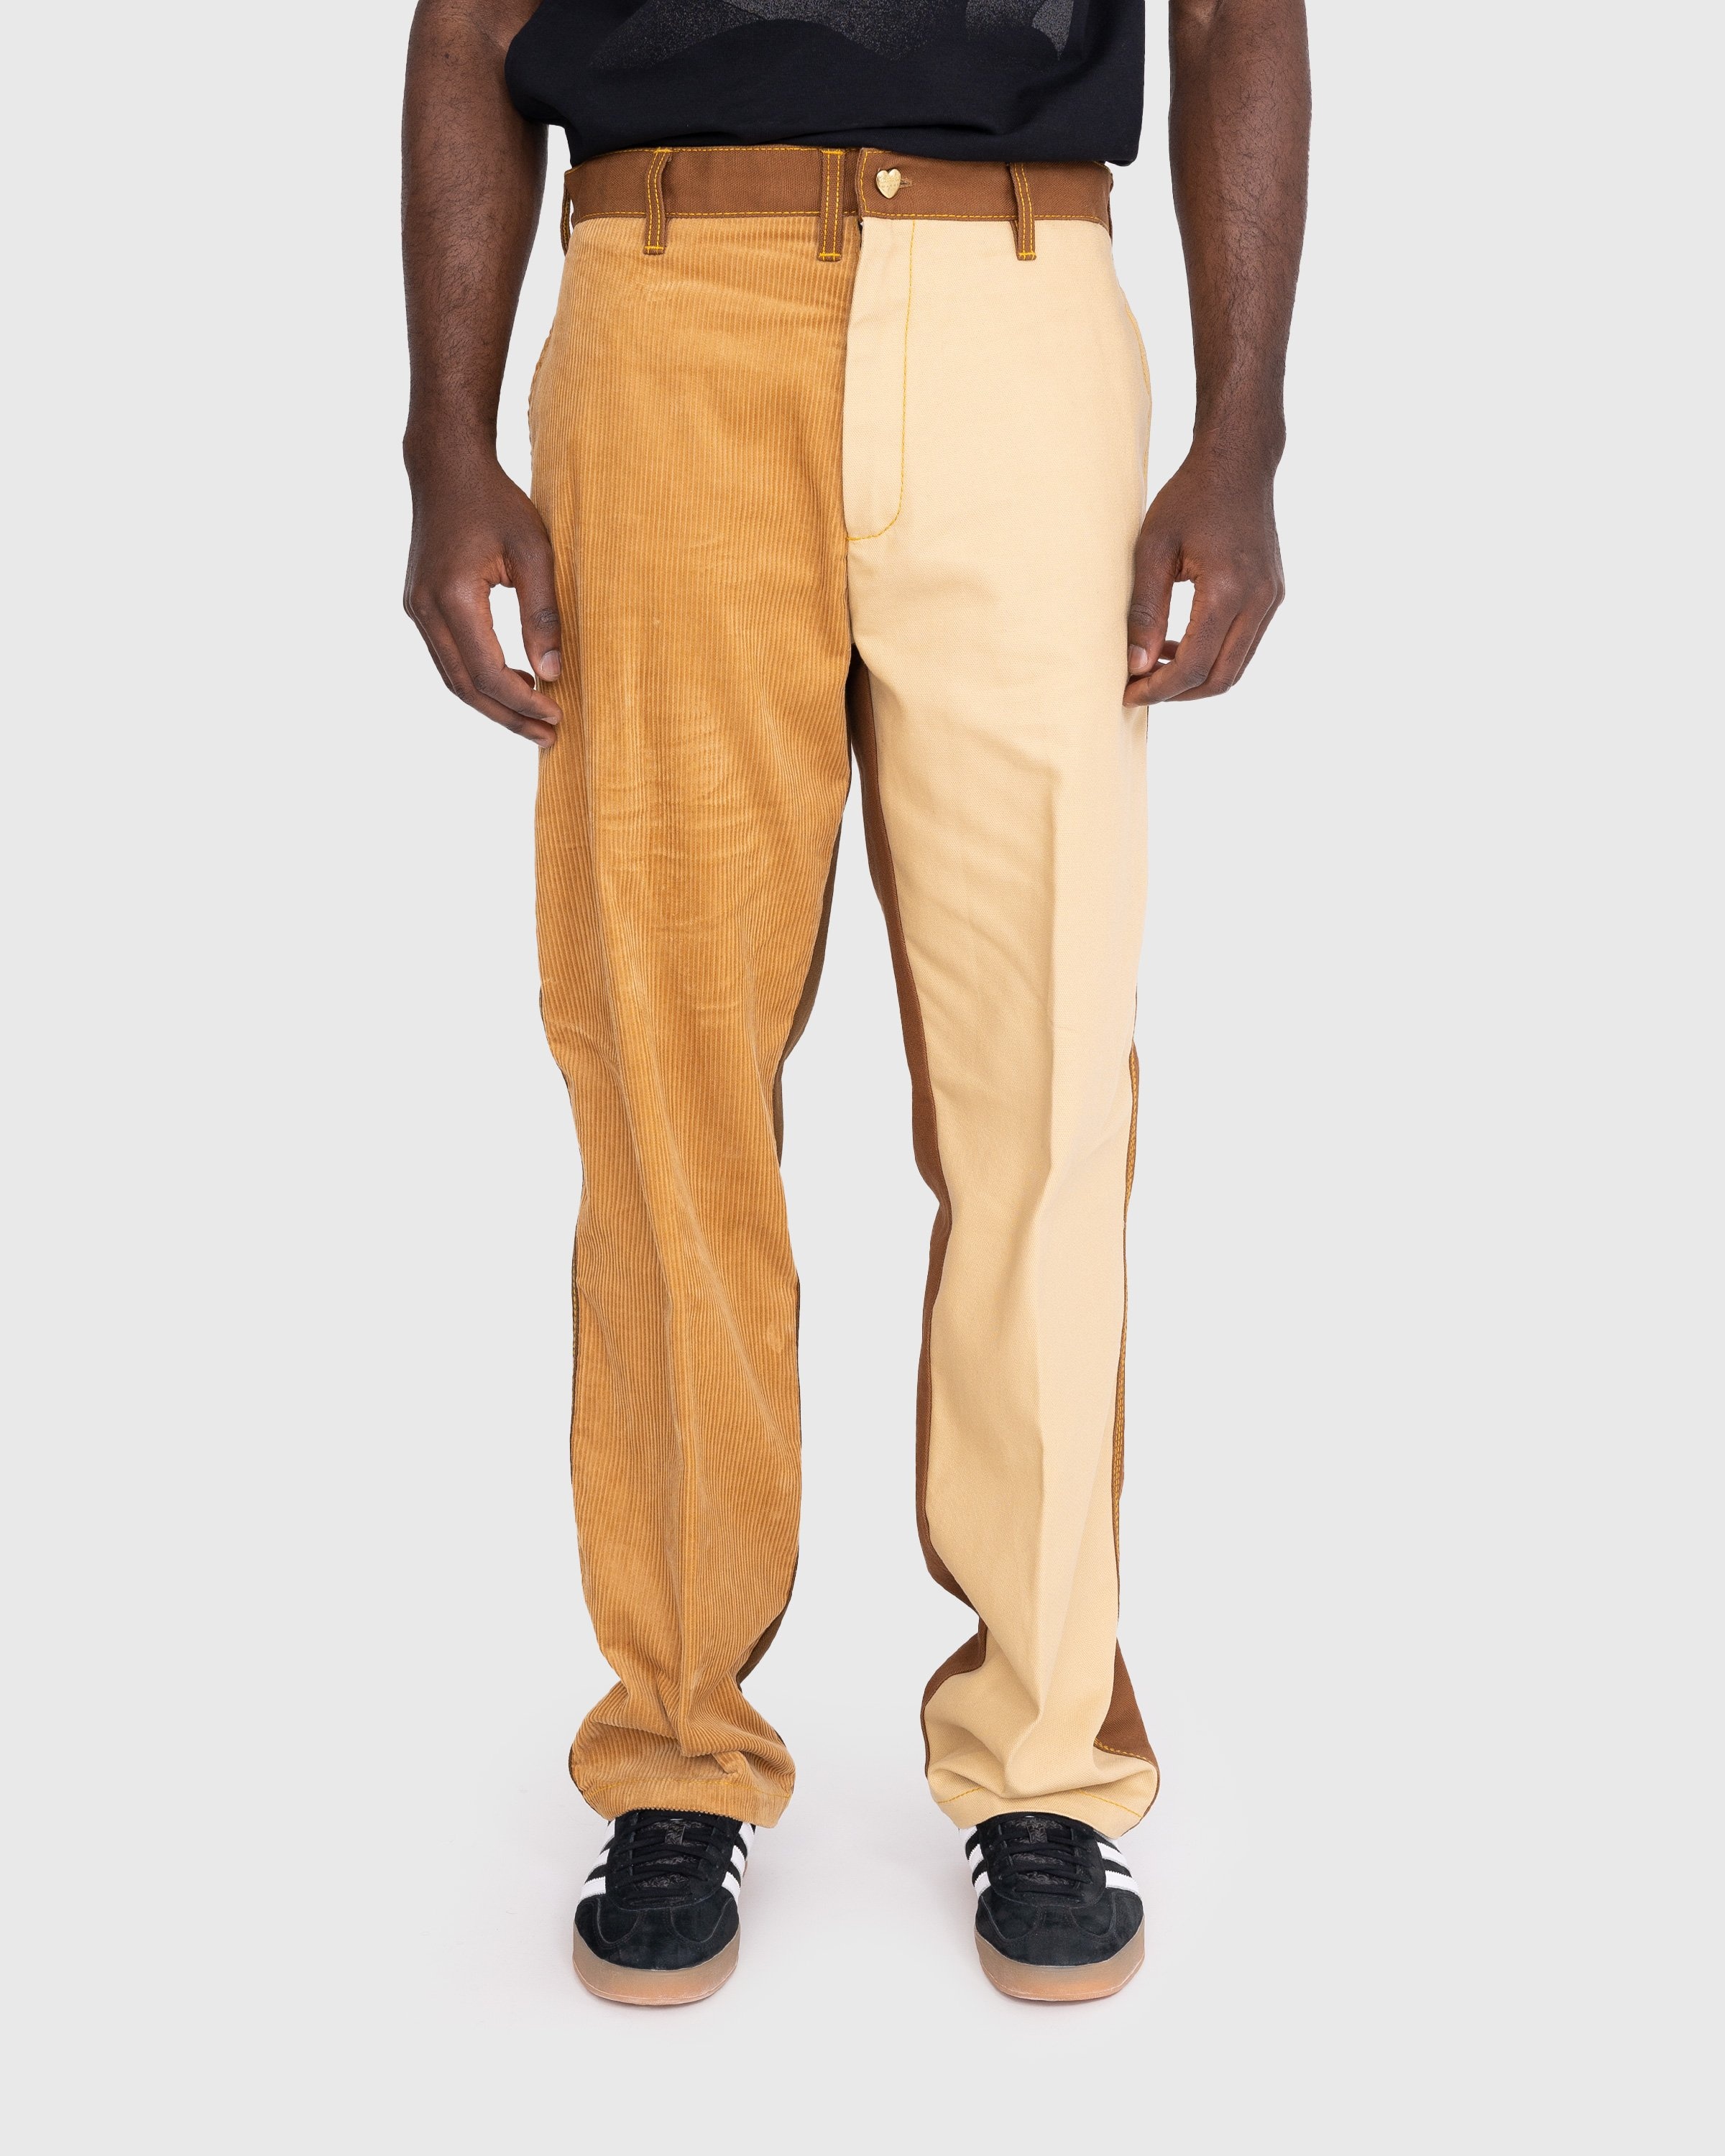 Marni x Carhartt WIP – Colorblocked Trousers Brown - Pants - Brown - Image 2